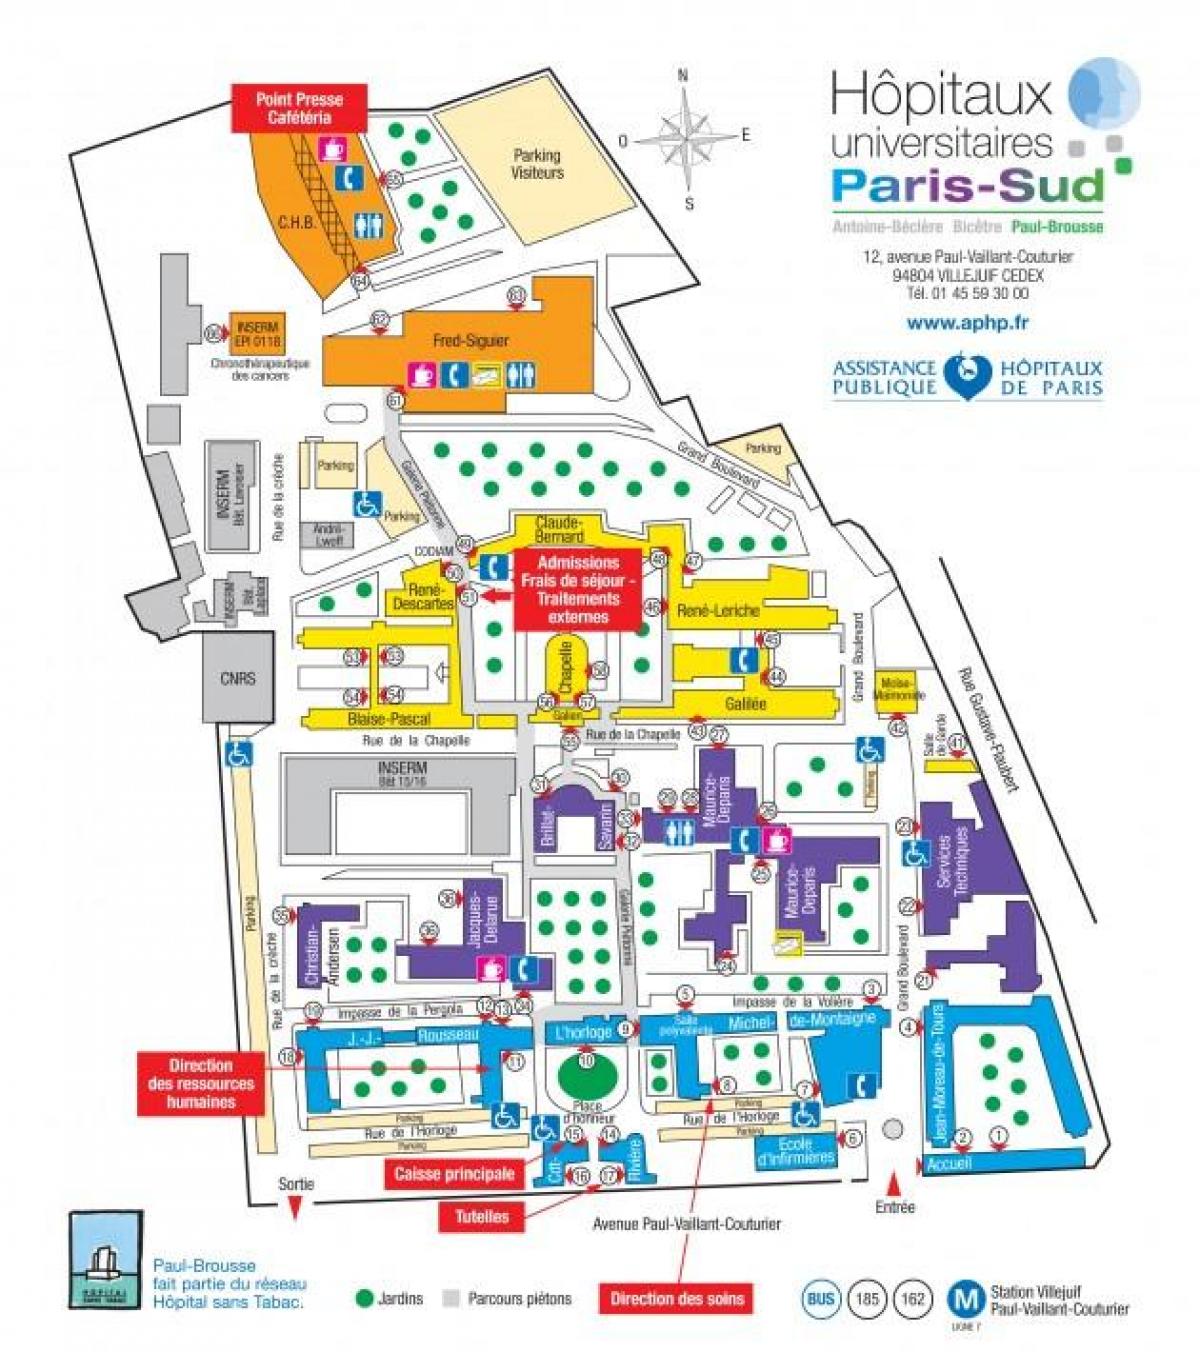 Mapa Pavol-Brousse nemocnici